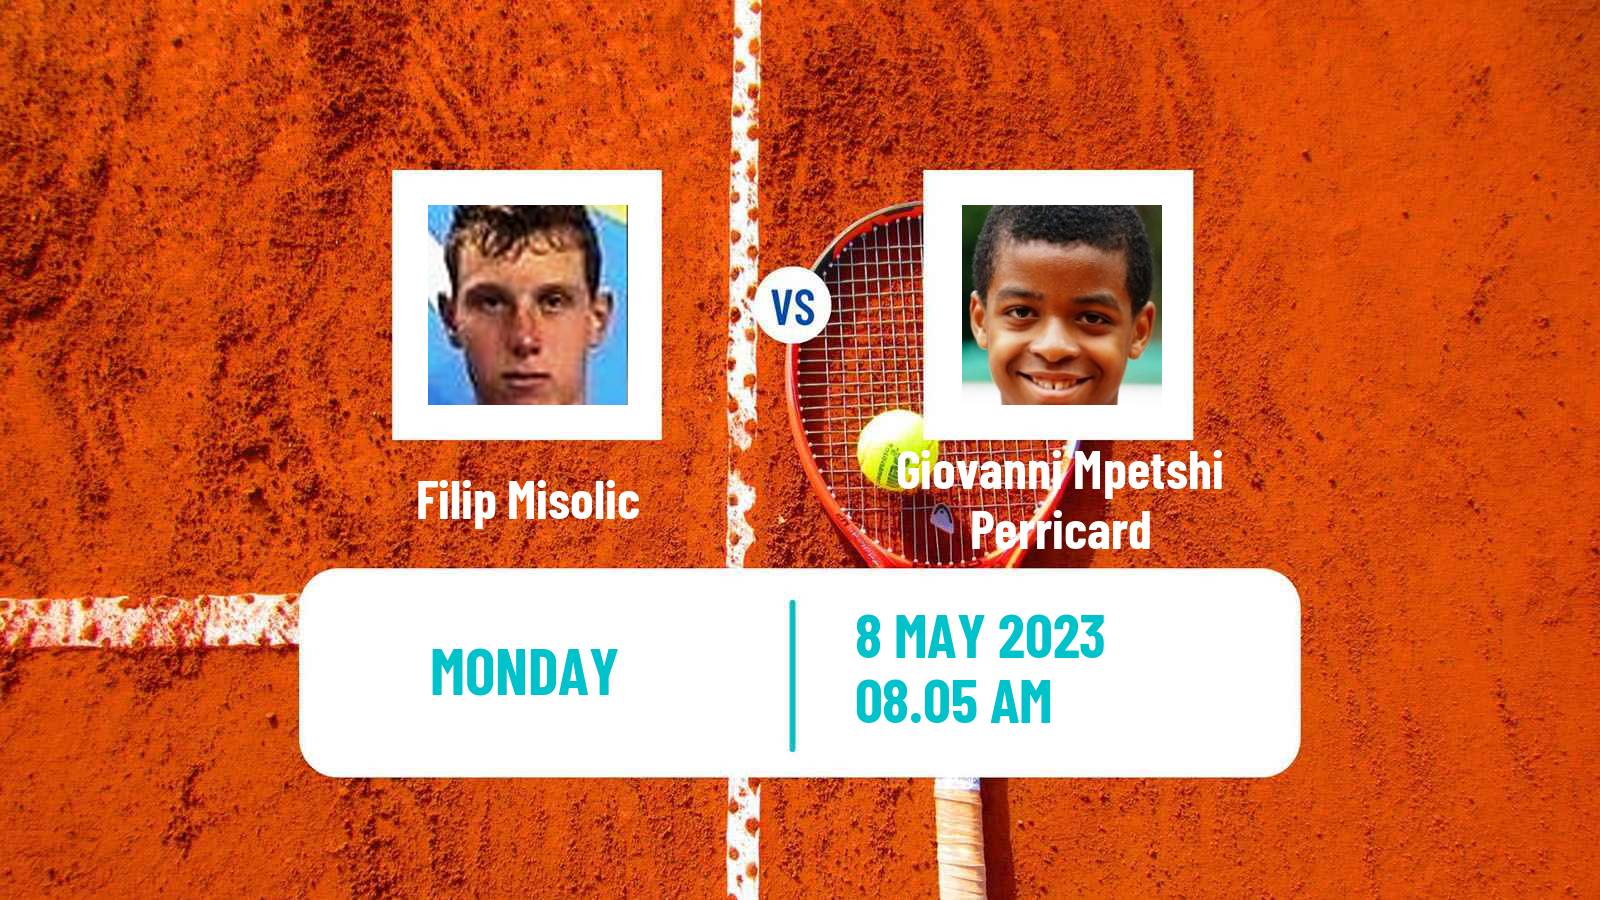 Tennis ATP Challenger Filip Misolic - Giovanni Mpetshi Perricard